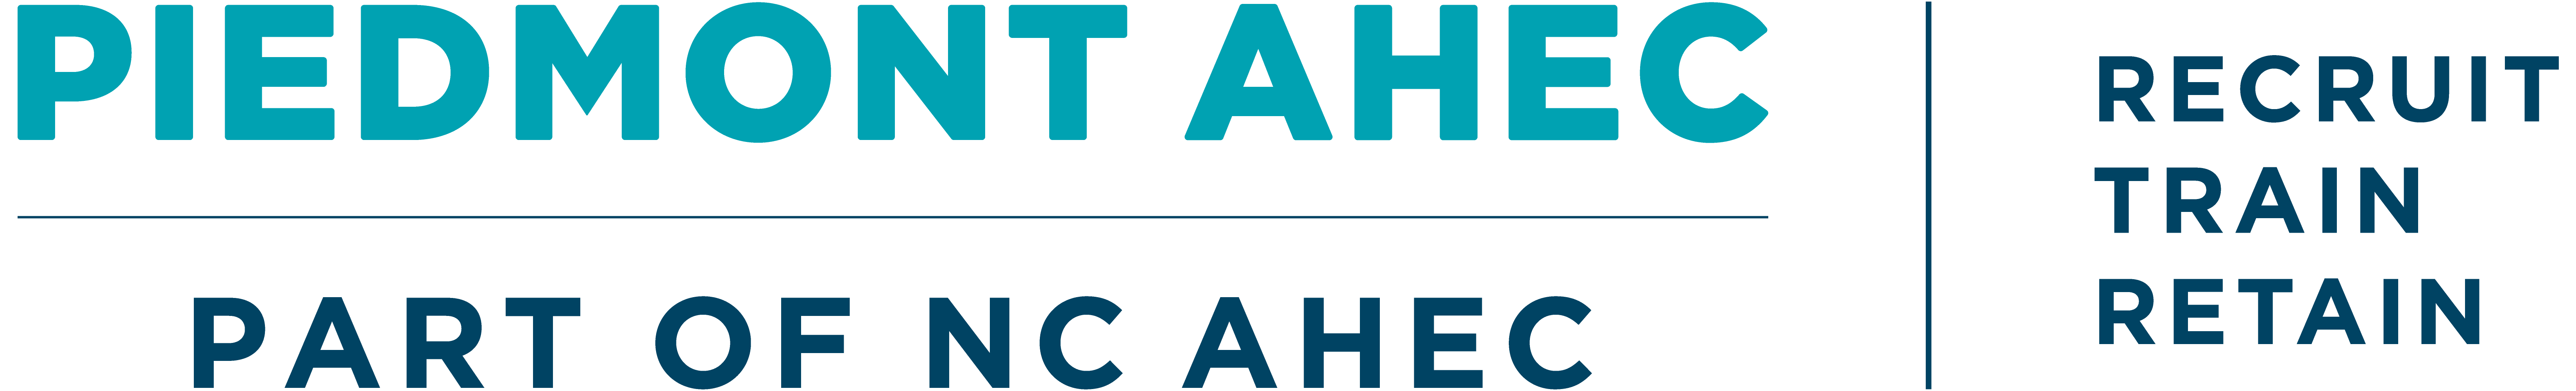 Piedmont AHEC logo